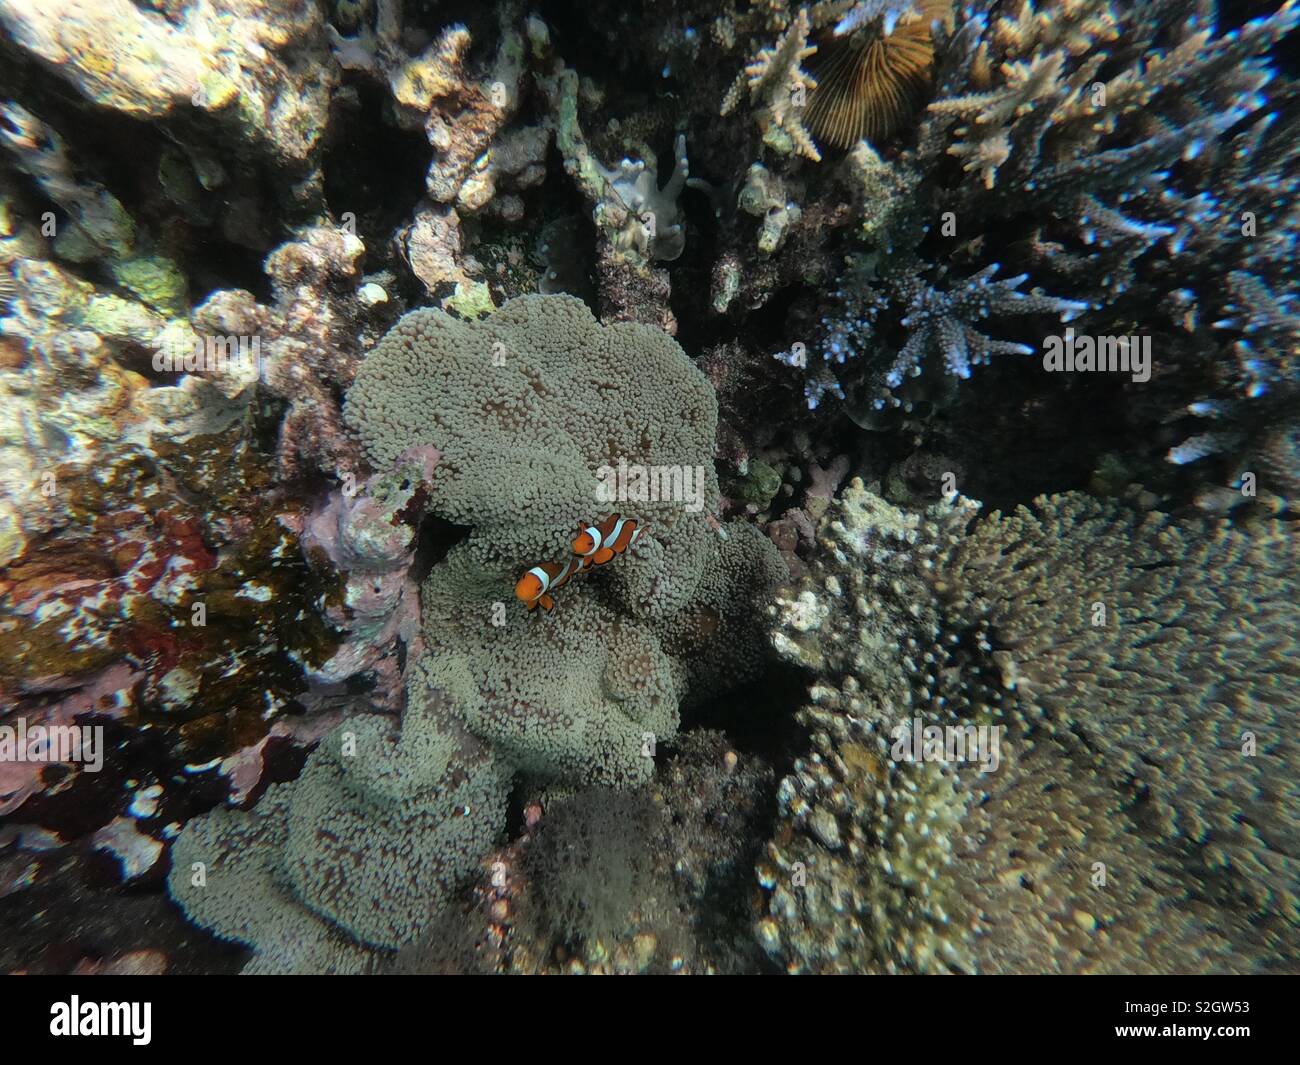 Under the sea finding Nemo Stock Photo